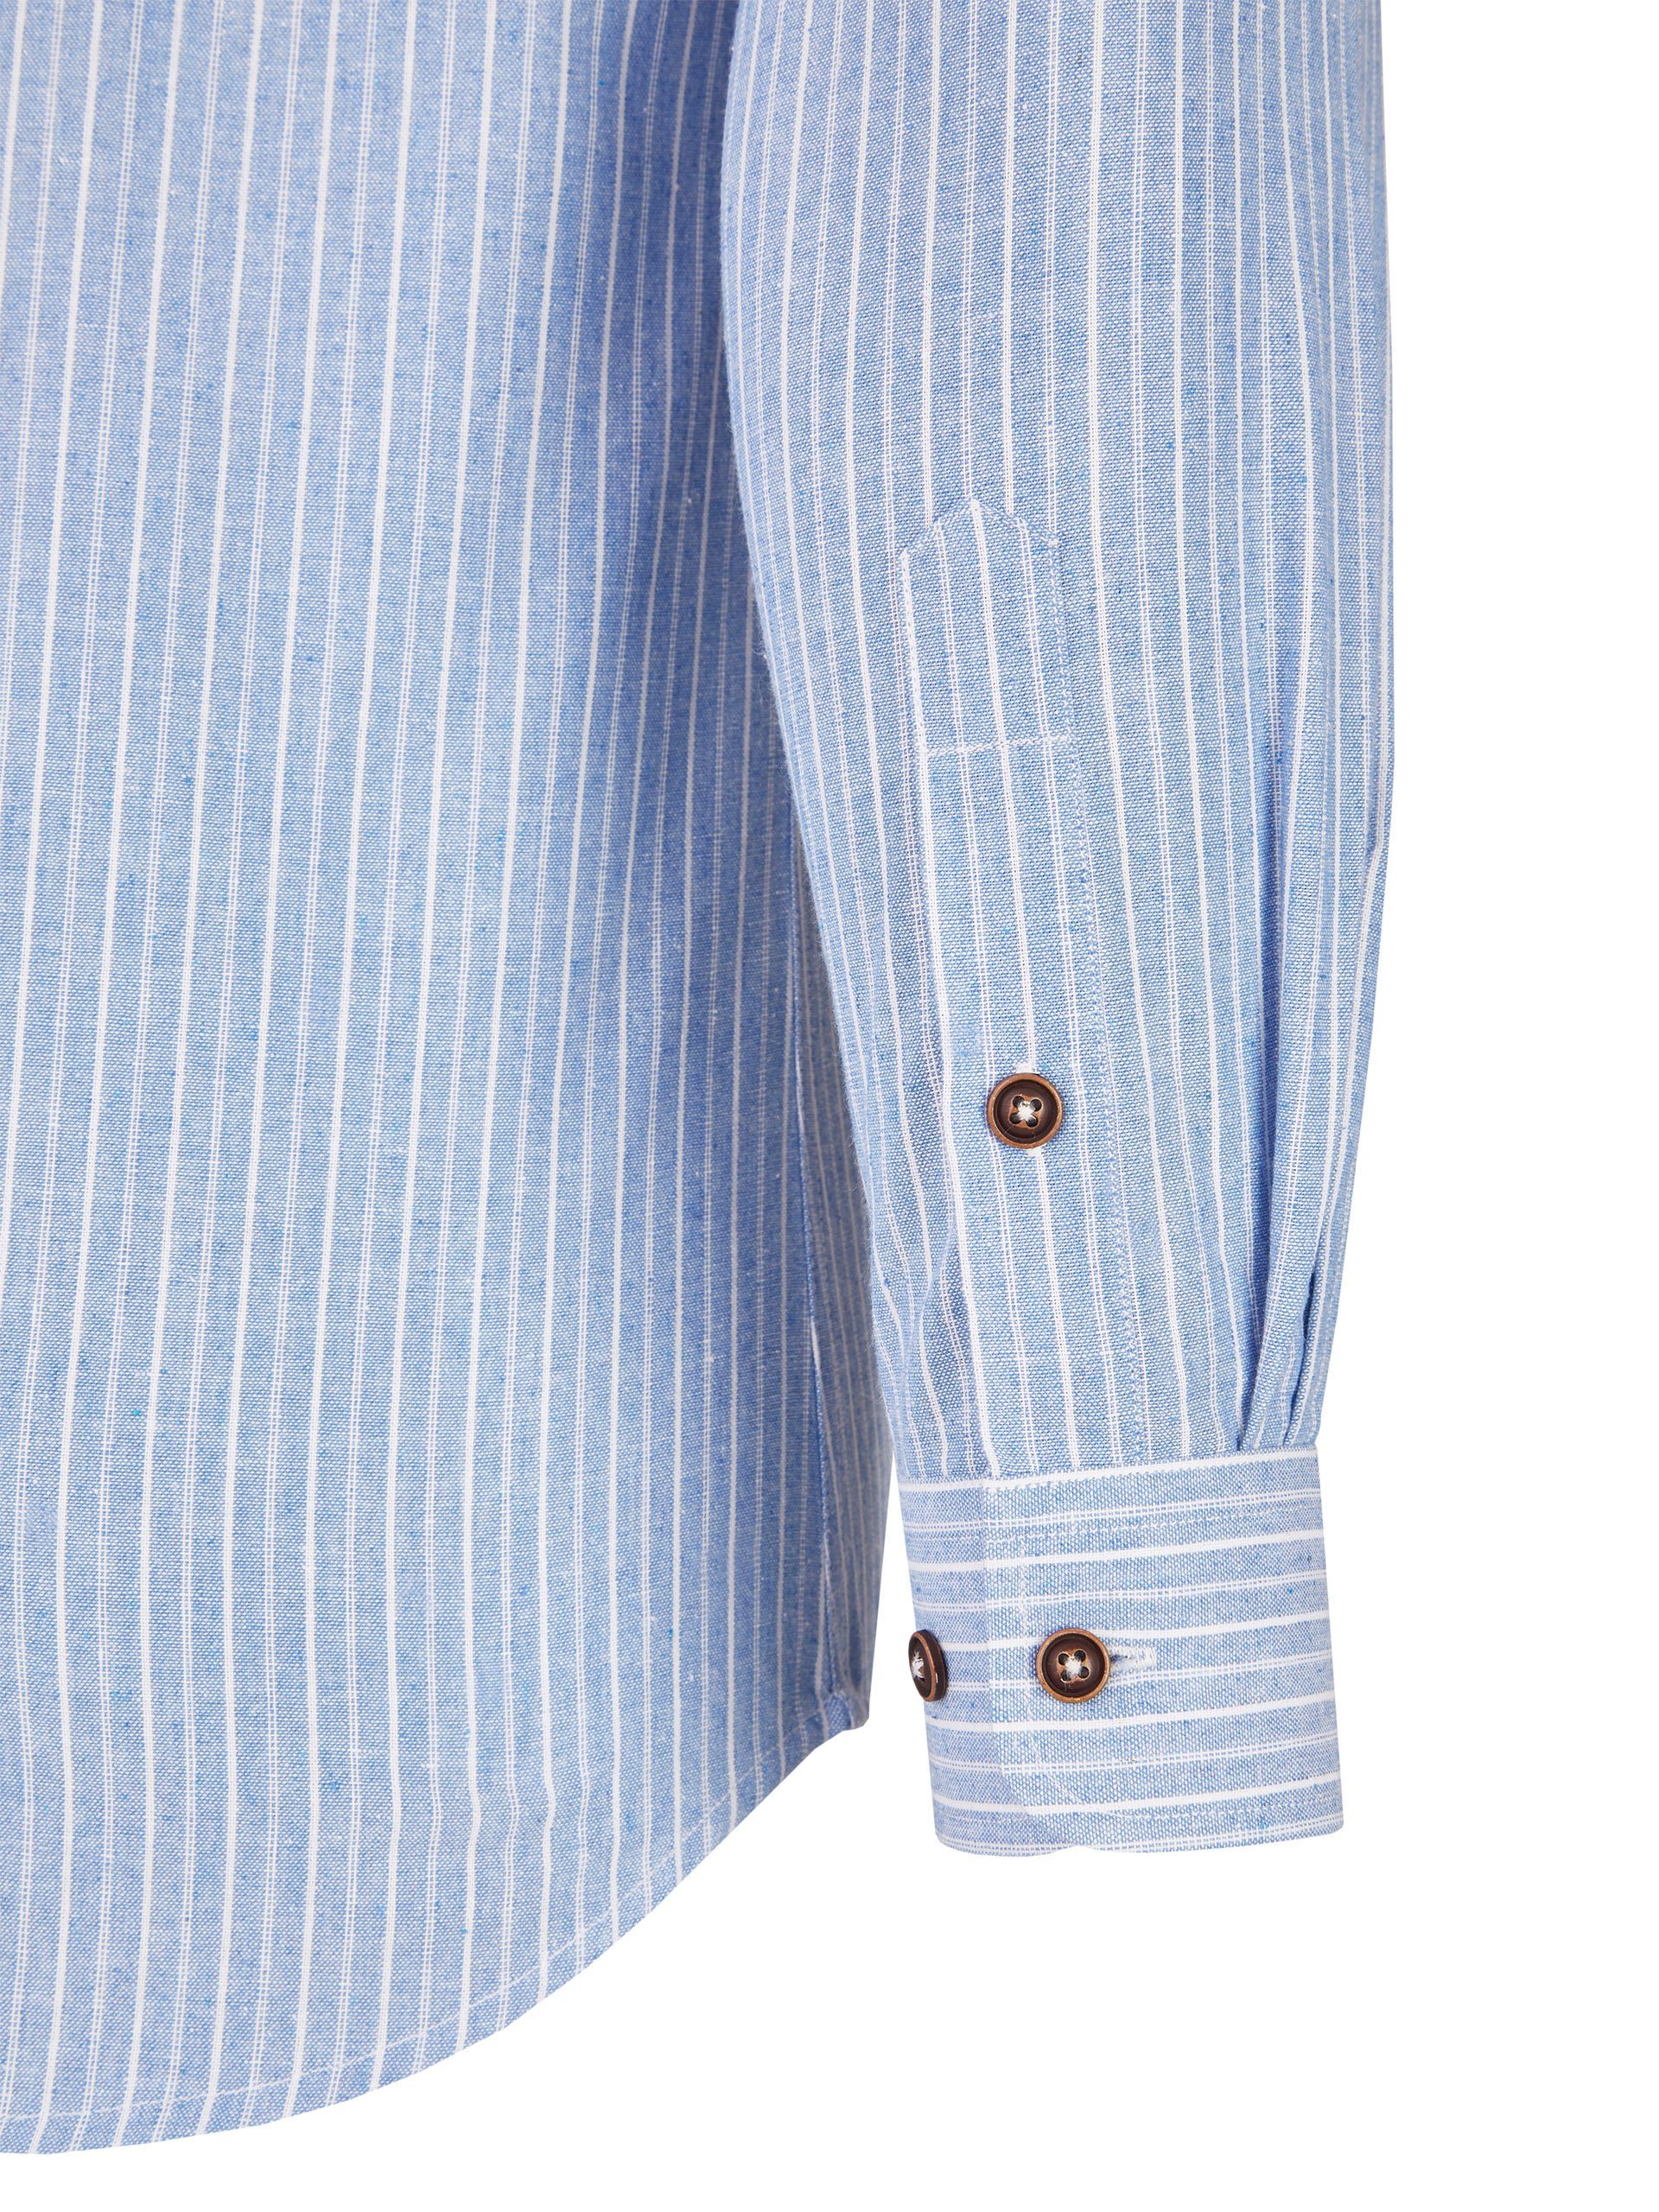 Almbock Trachtenhemd Herrenhemd Florian hellblau-weiß-gestreift